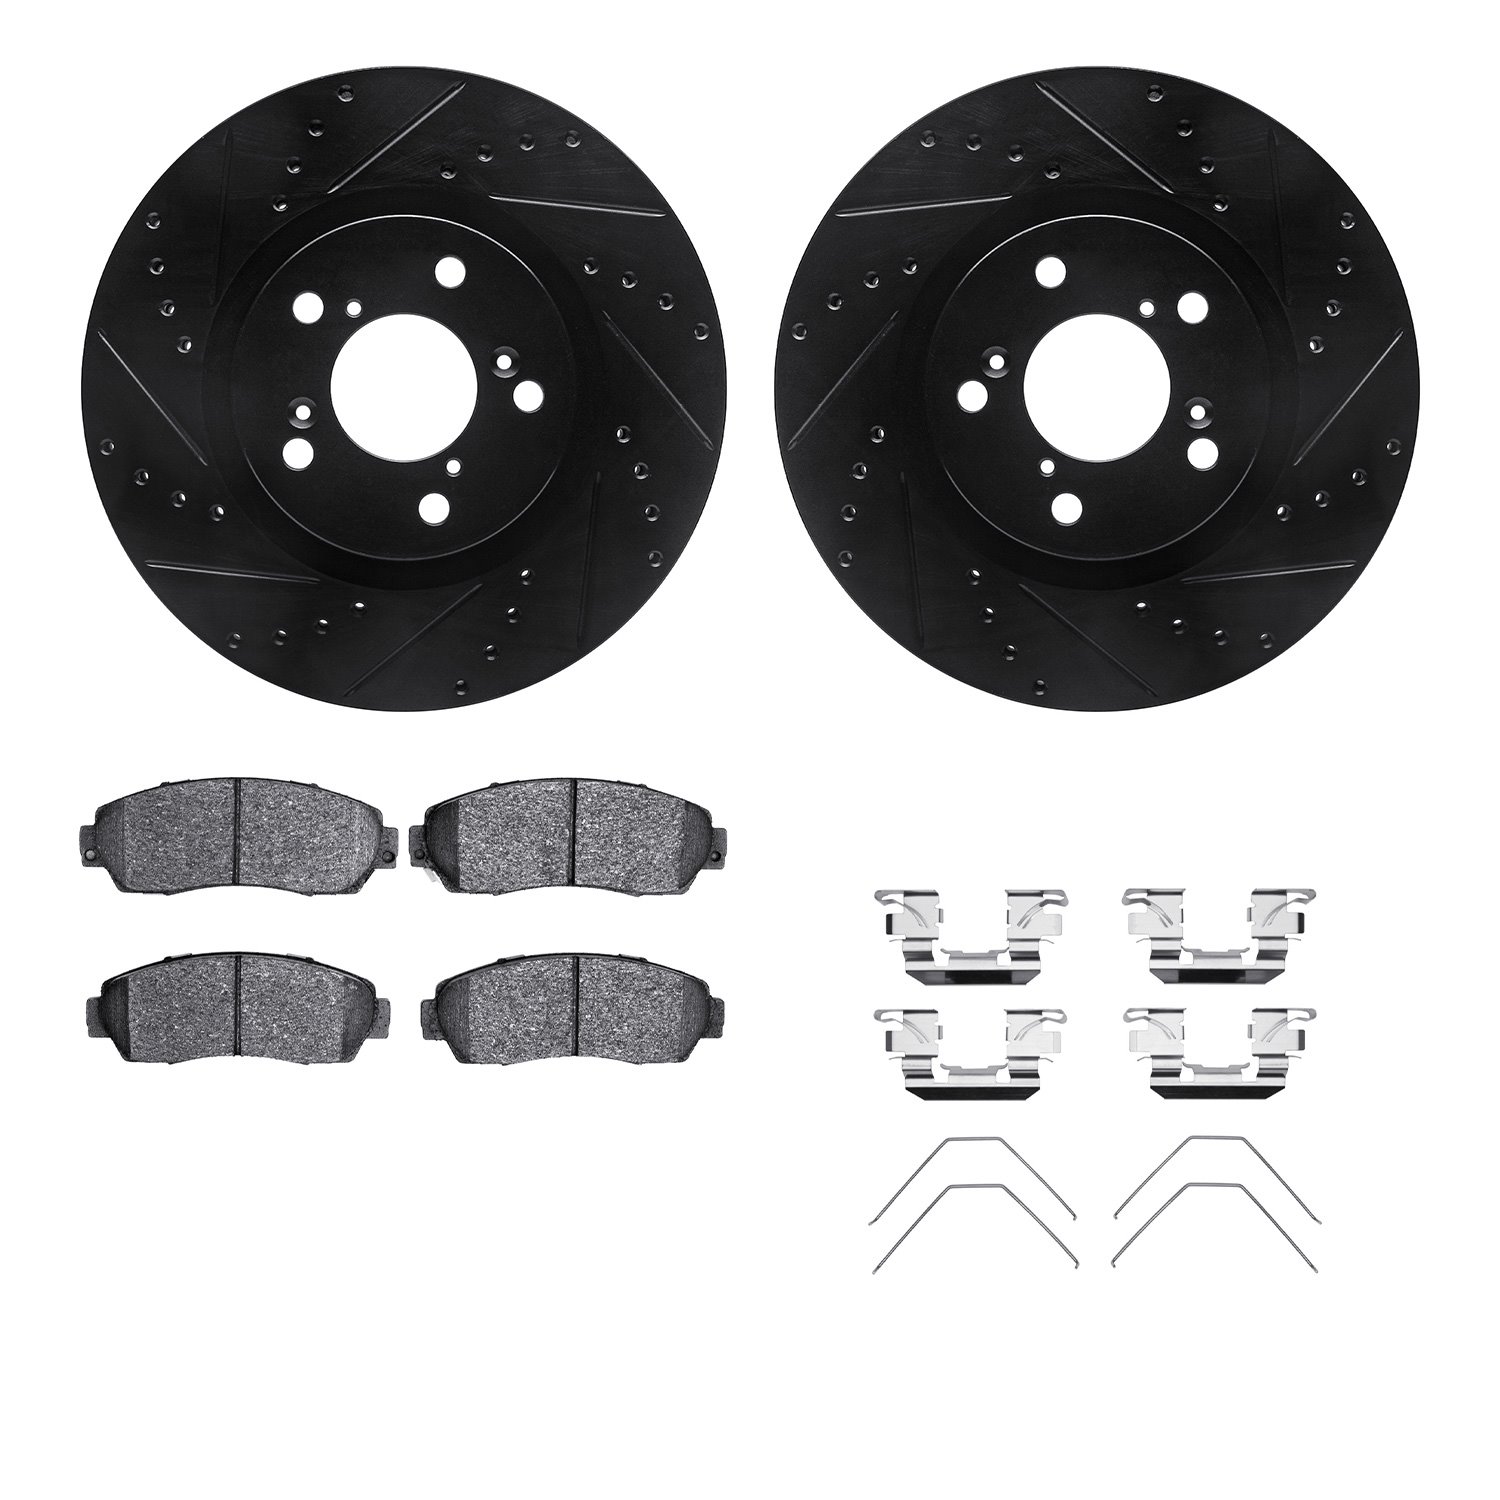 8312-59086 Drilled/Slotted Brake Rotors with 3000-Series Ceramic Brake Pads Kit & Hardware [Black], 2011-2014 Acura/Honda, Posit